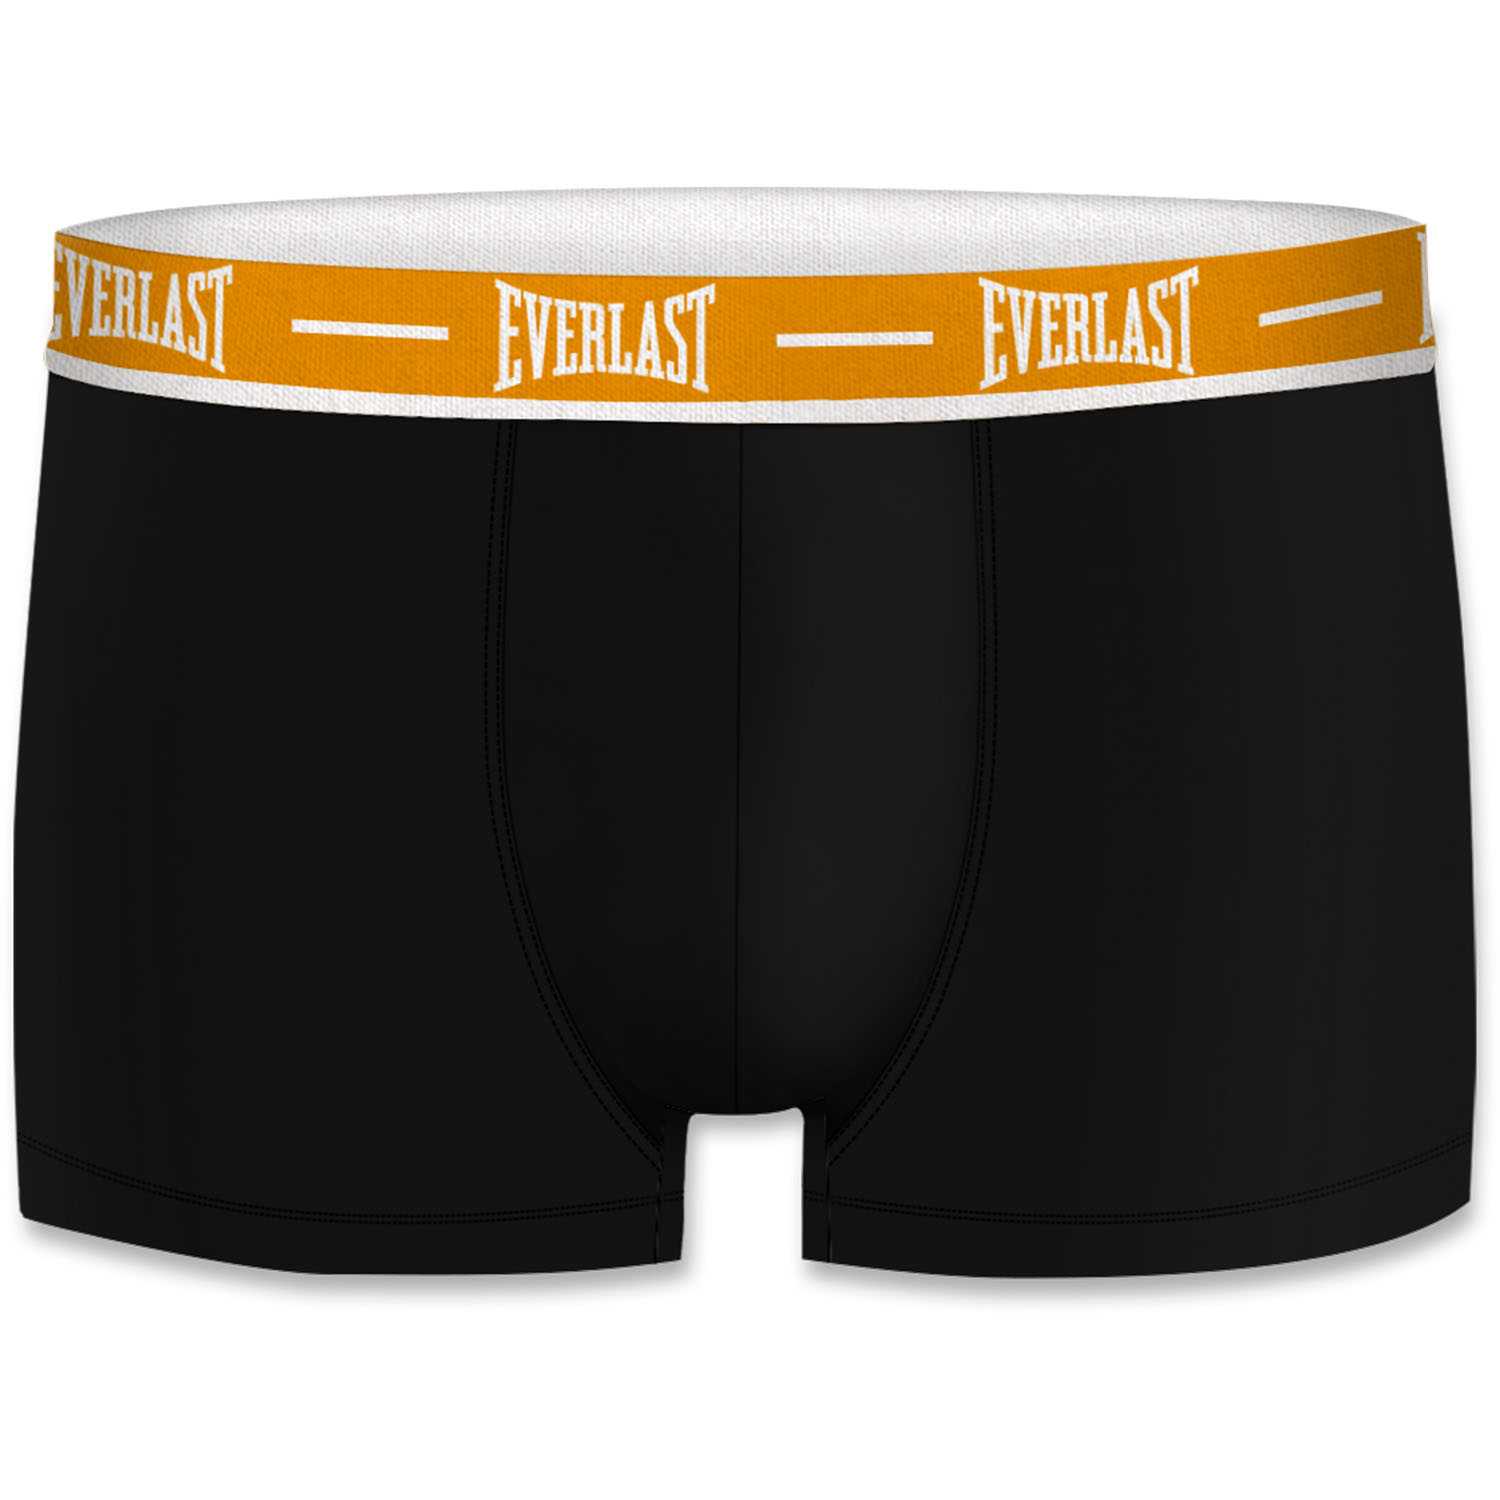 Everlast Boxershorts, AS2, schwarz-orange